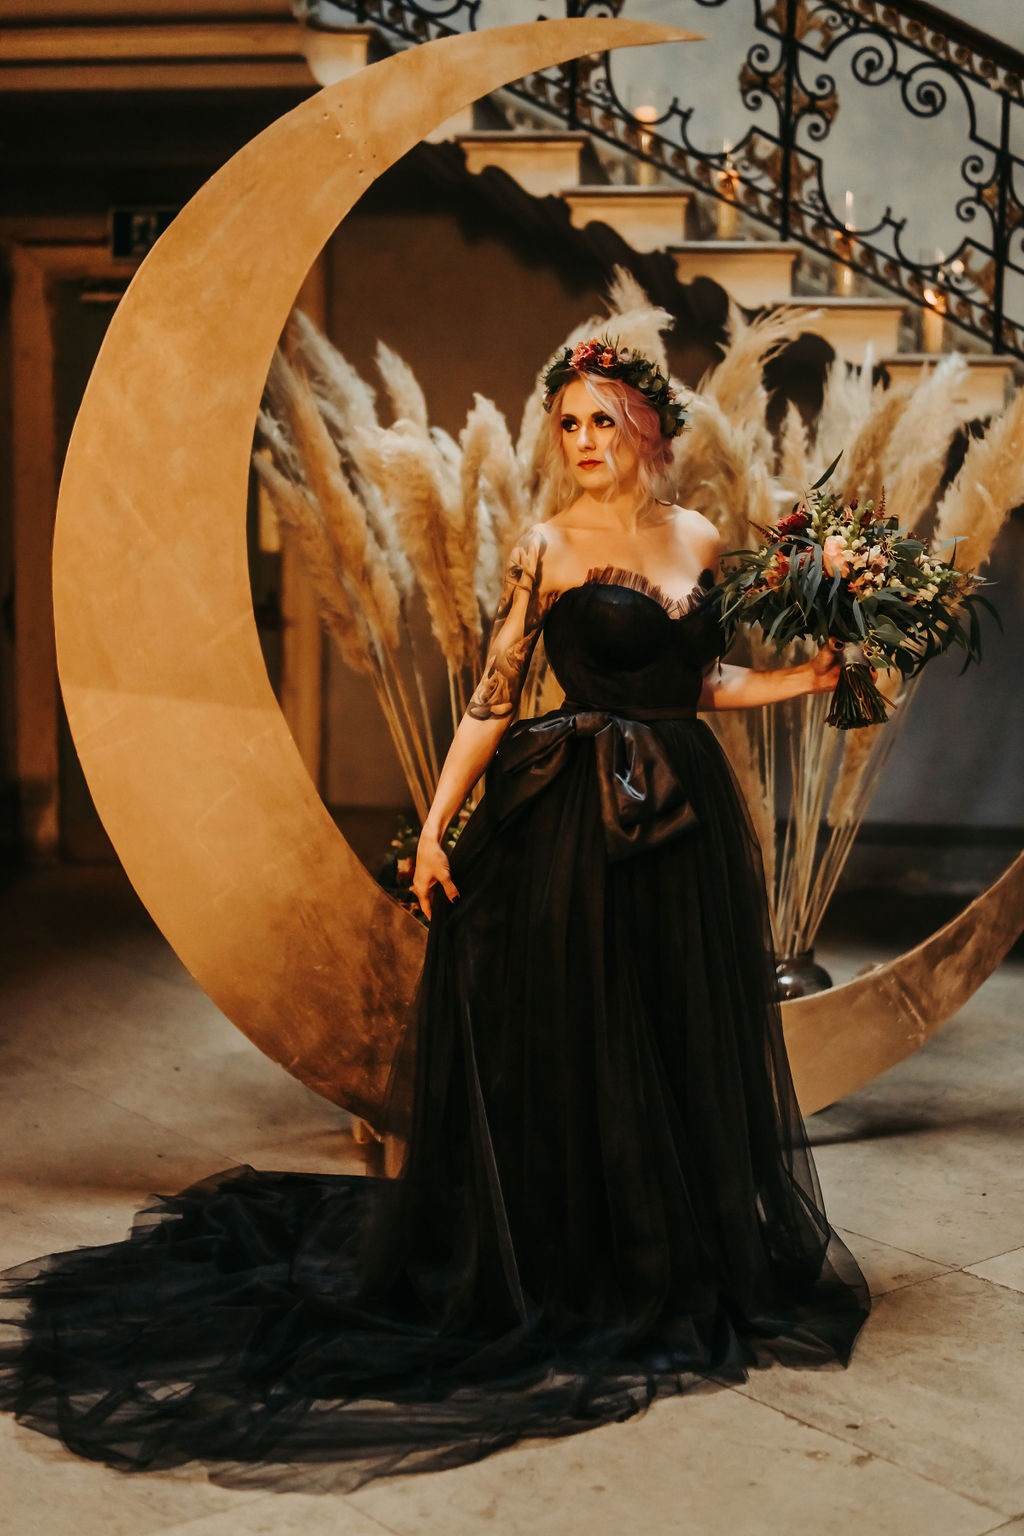 celestial gothic wedding - moon wedding prop - black wedding dress - alternative wedding - edgy wedding